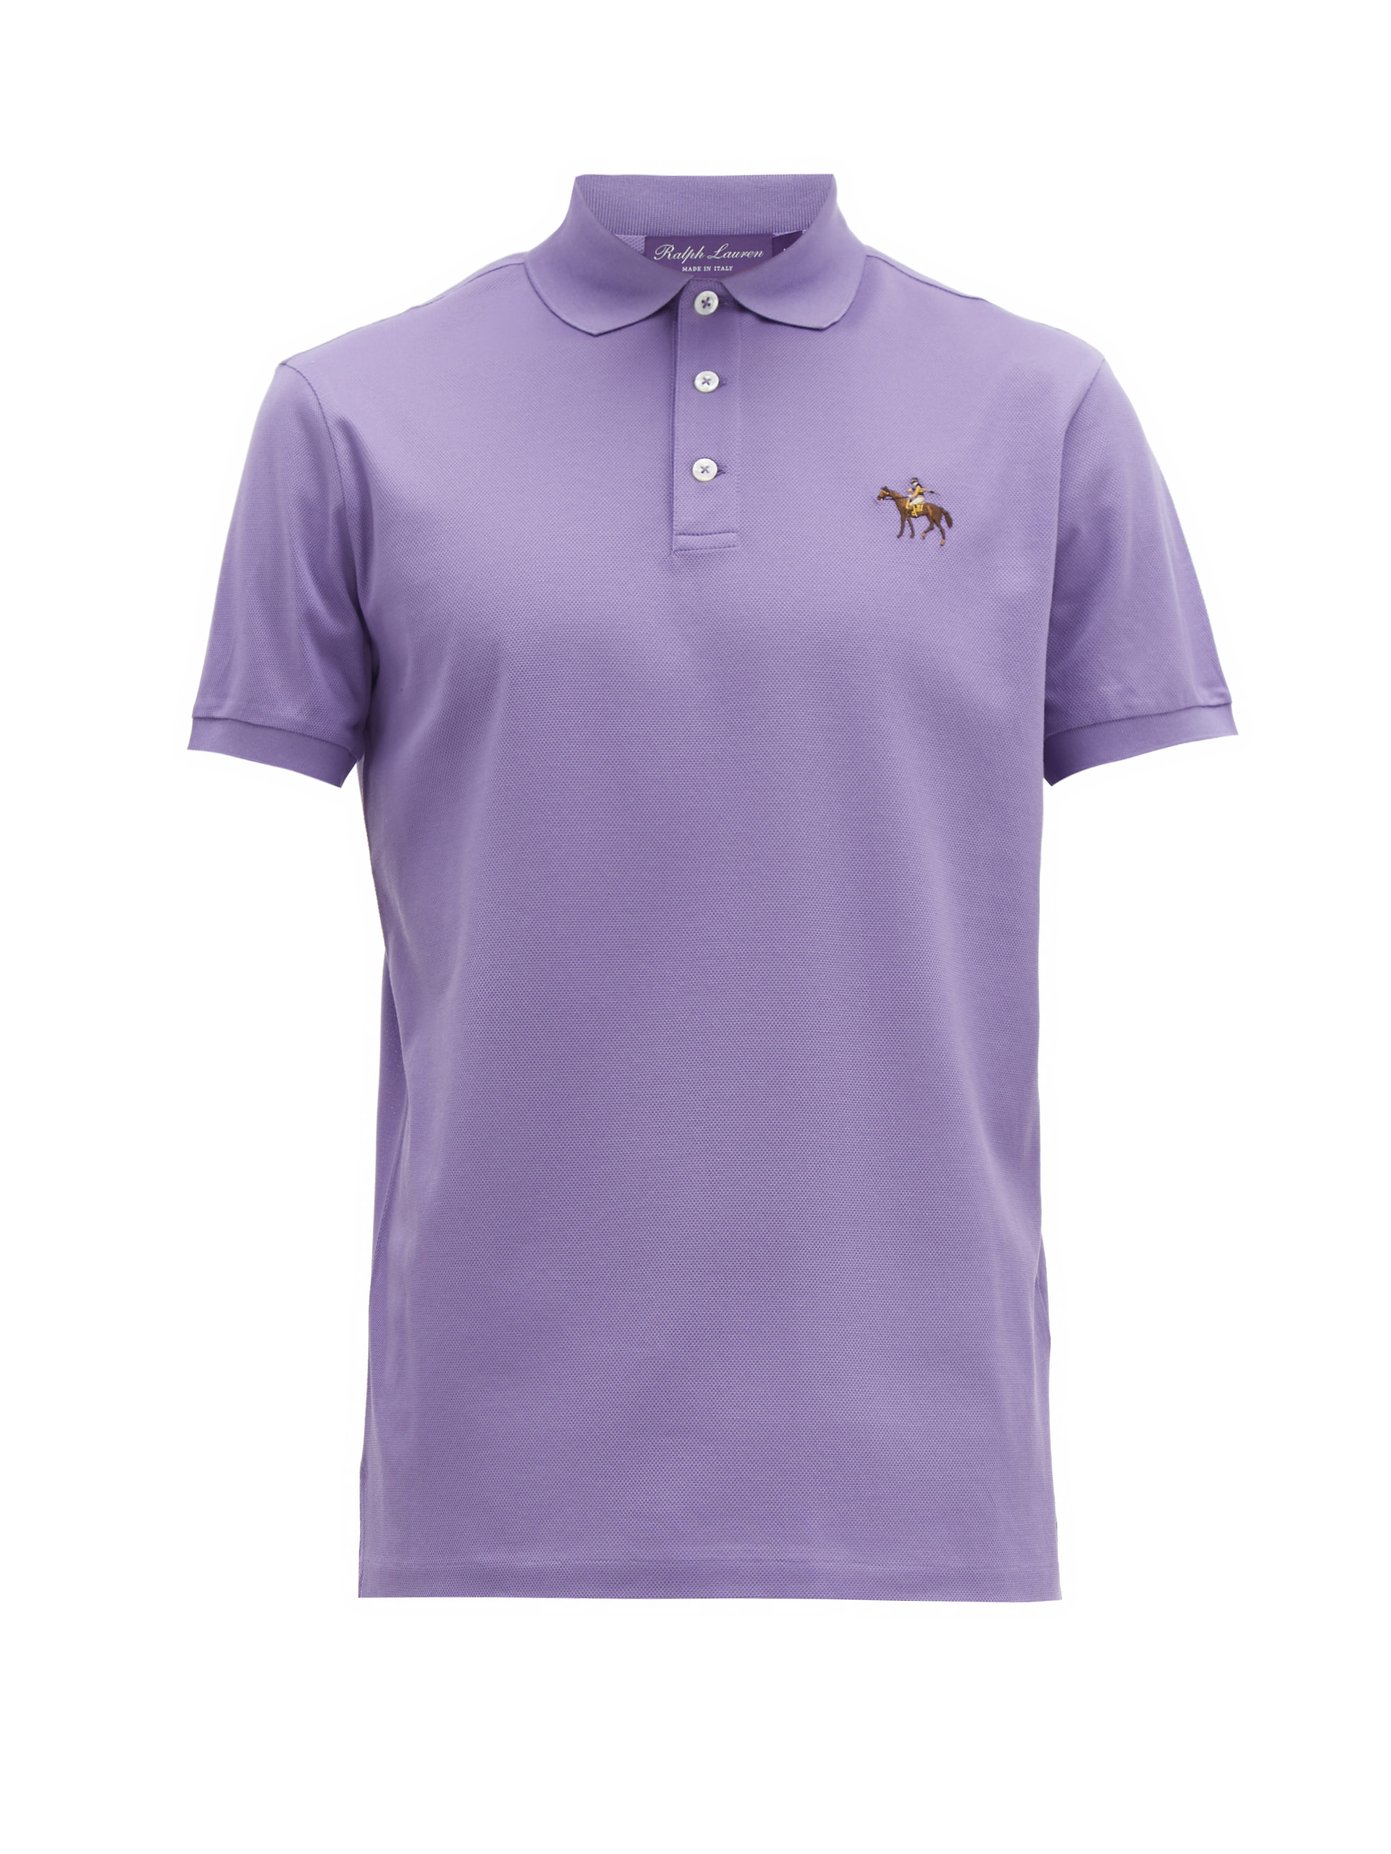 purple label shirt